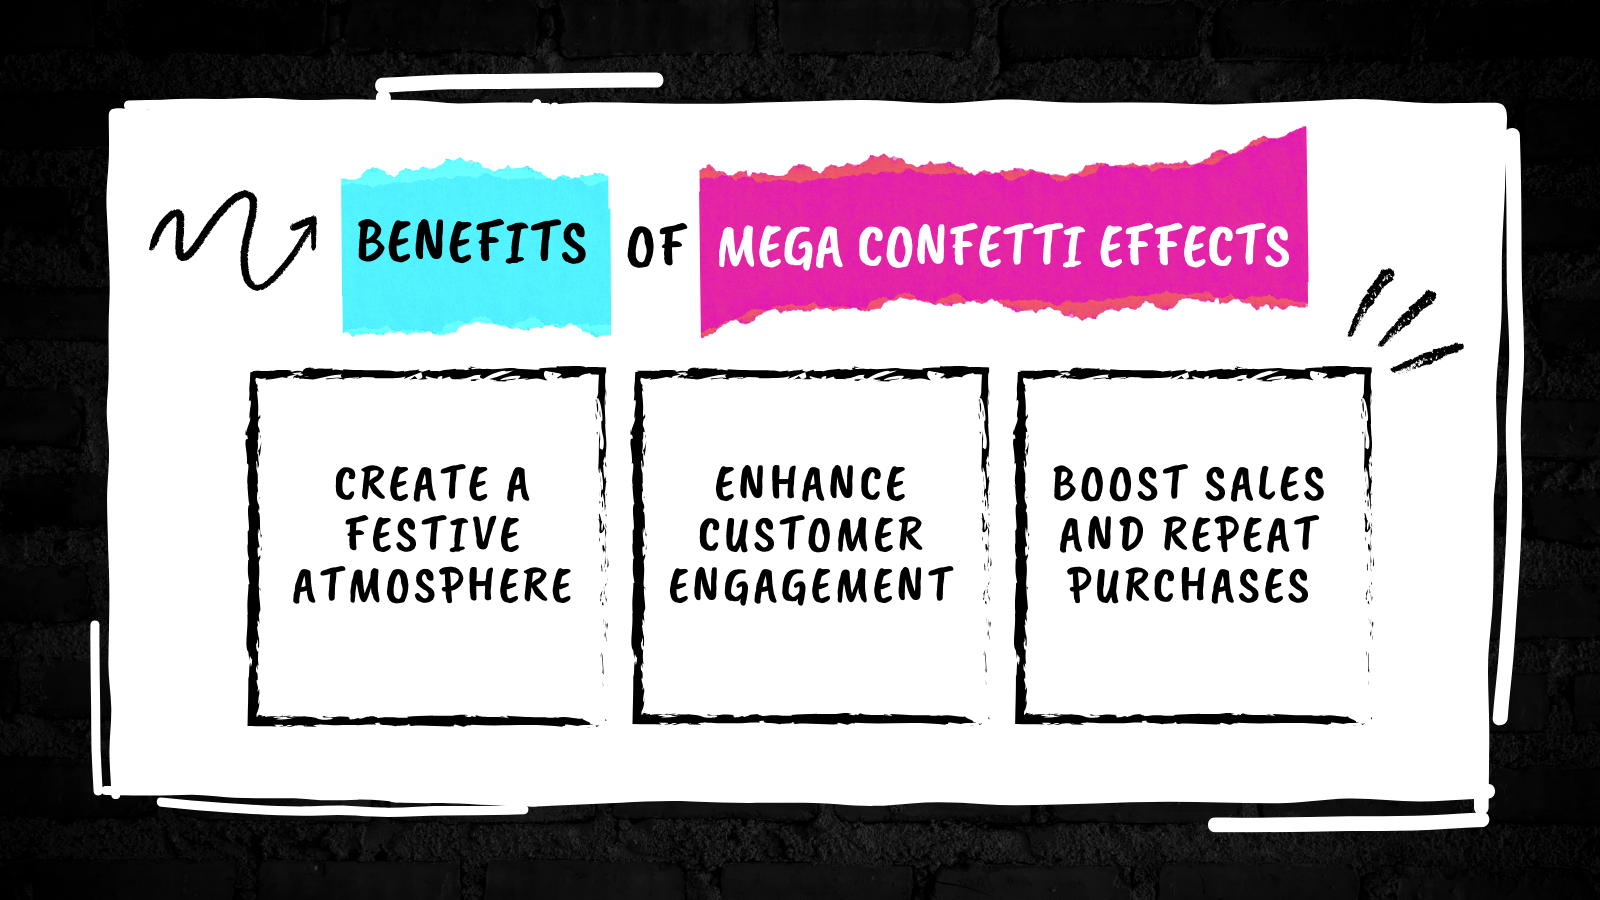 Mega Confetti Effects - Create a festive atmosphere